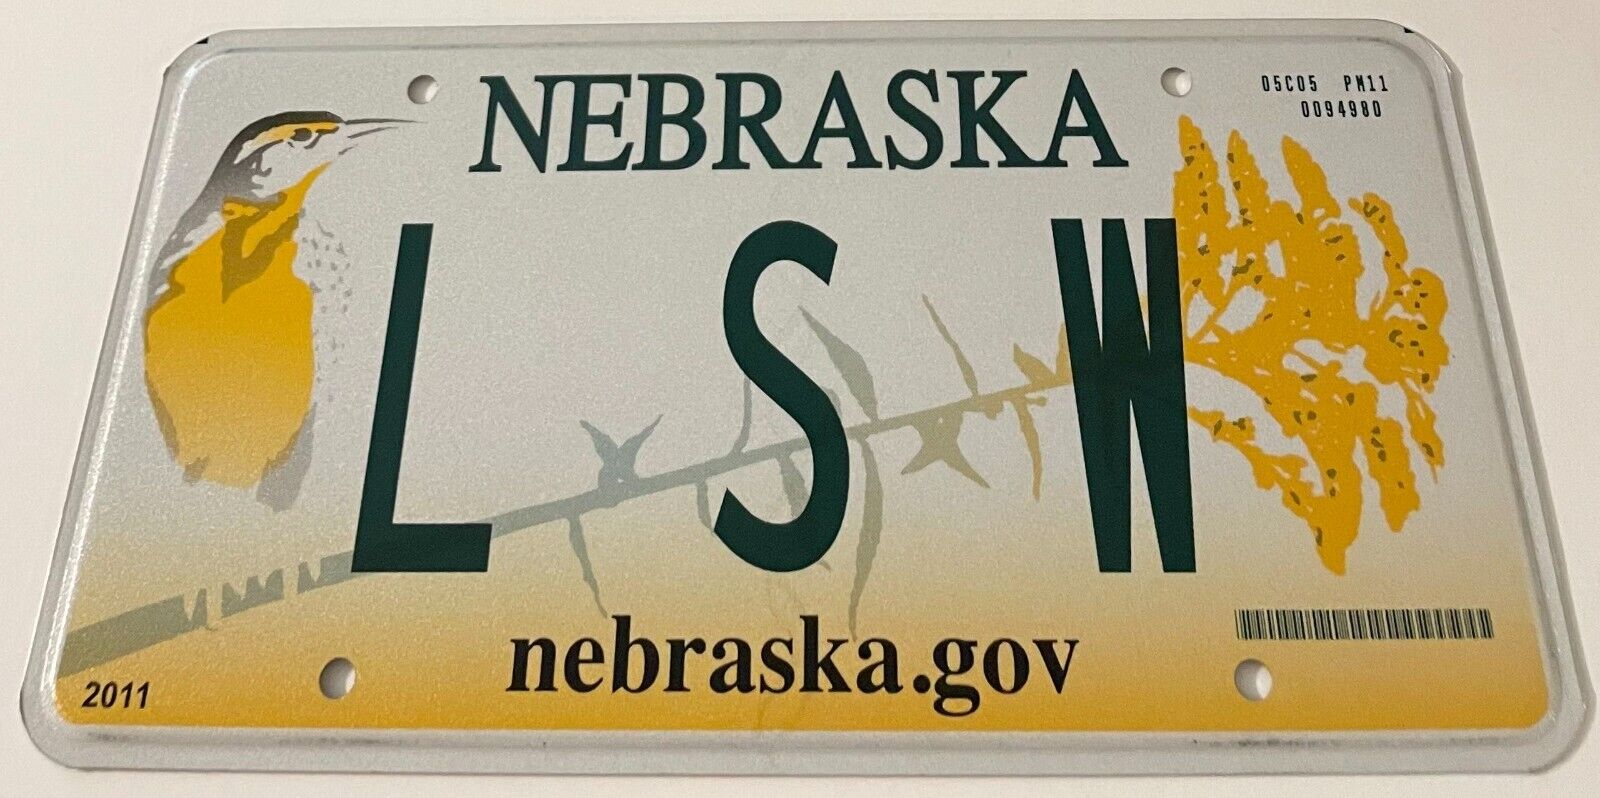 L S W Vanity License Plate  LSW Licensed Social Worker Nebraska Social Services